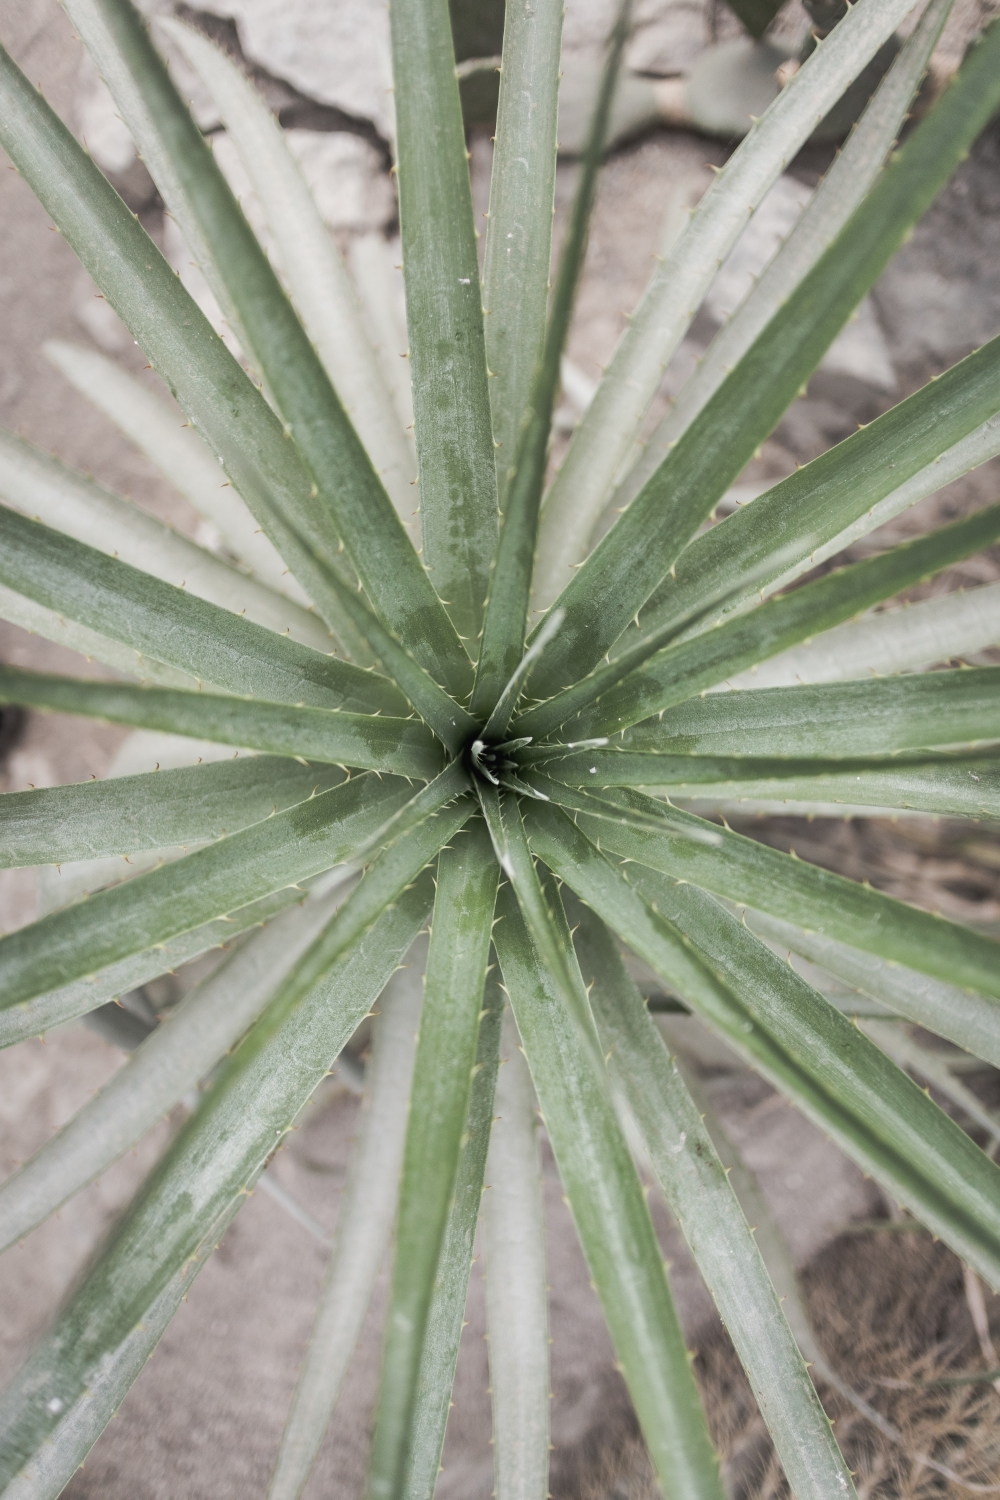  7 Indoor Plants that are hard to kill - Aloe Vera 